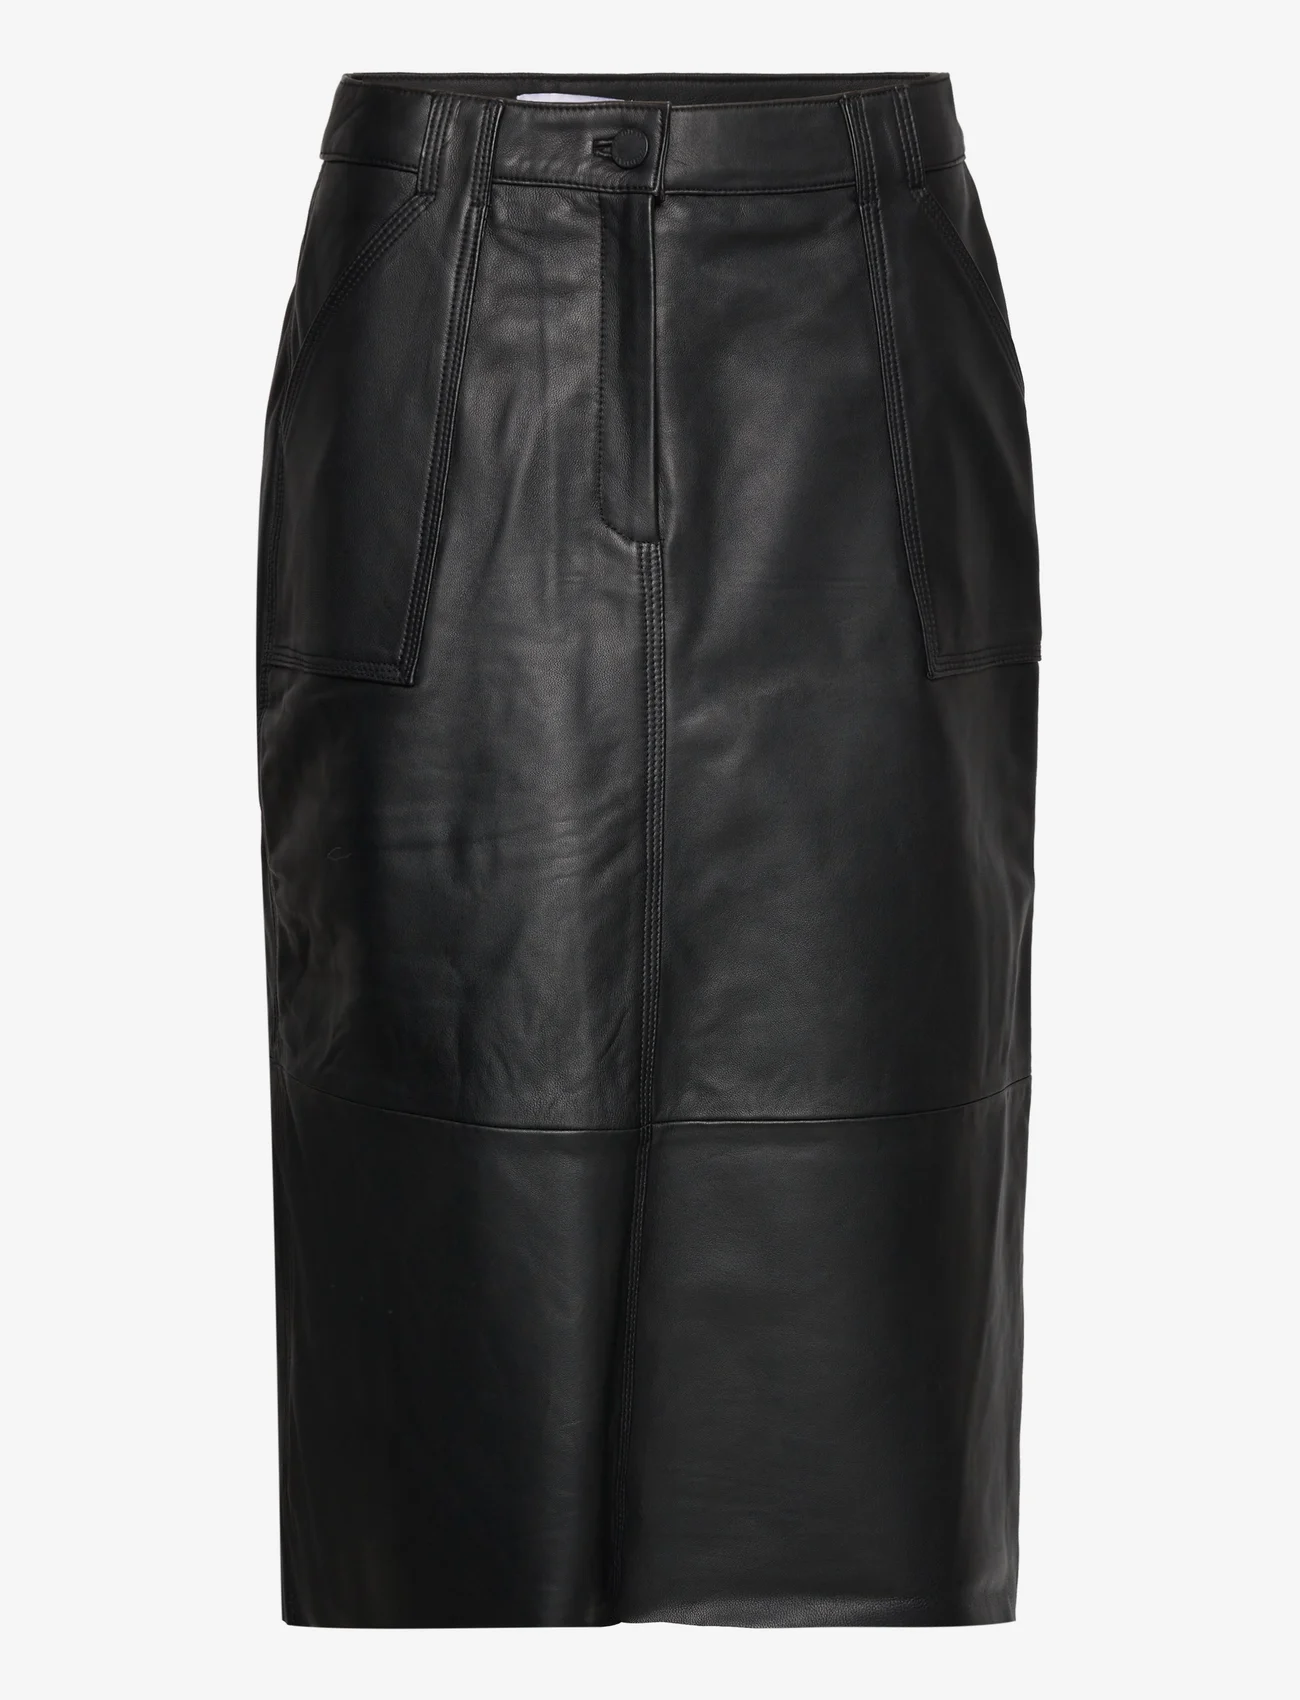 2NDDAY - 2ND Bari - Dense Leather - leather skirts - meteorite (black) - 0